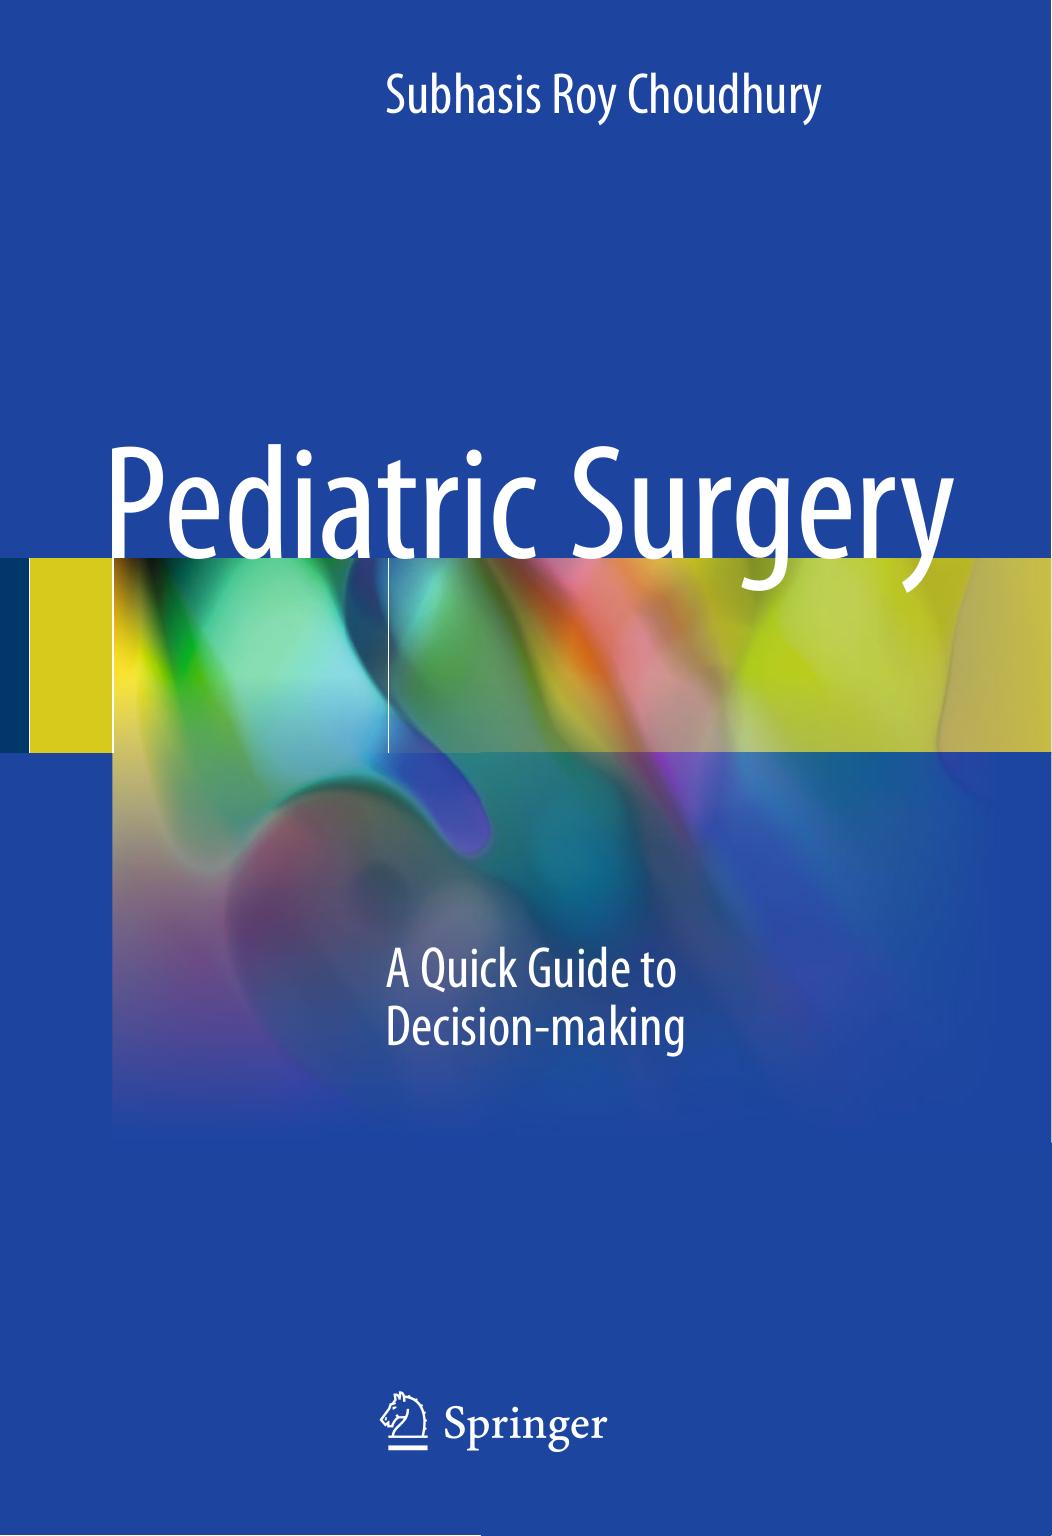 Pediatric Surgery by Subhasis Roy Choudhury